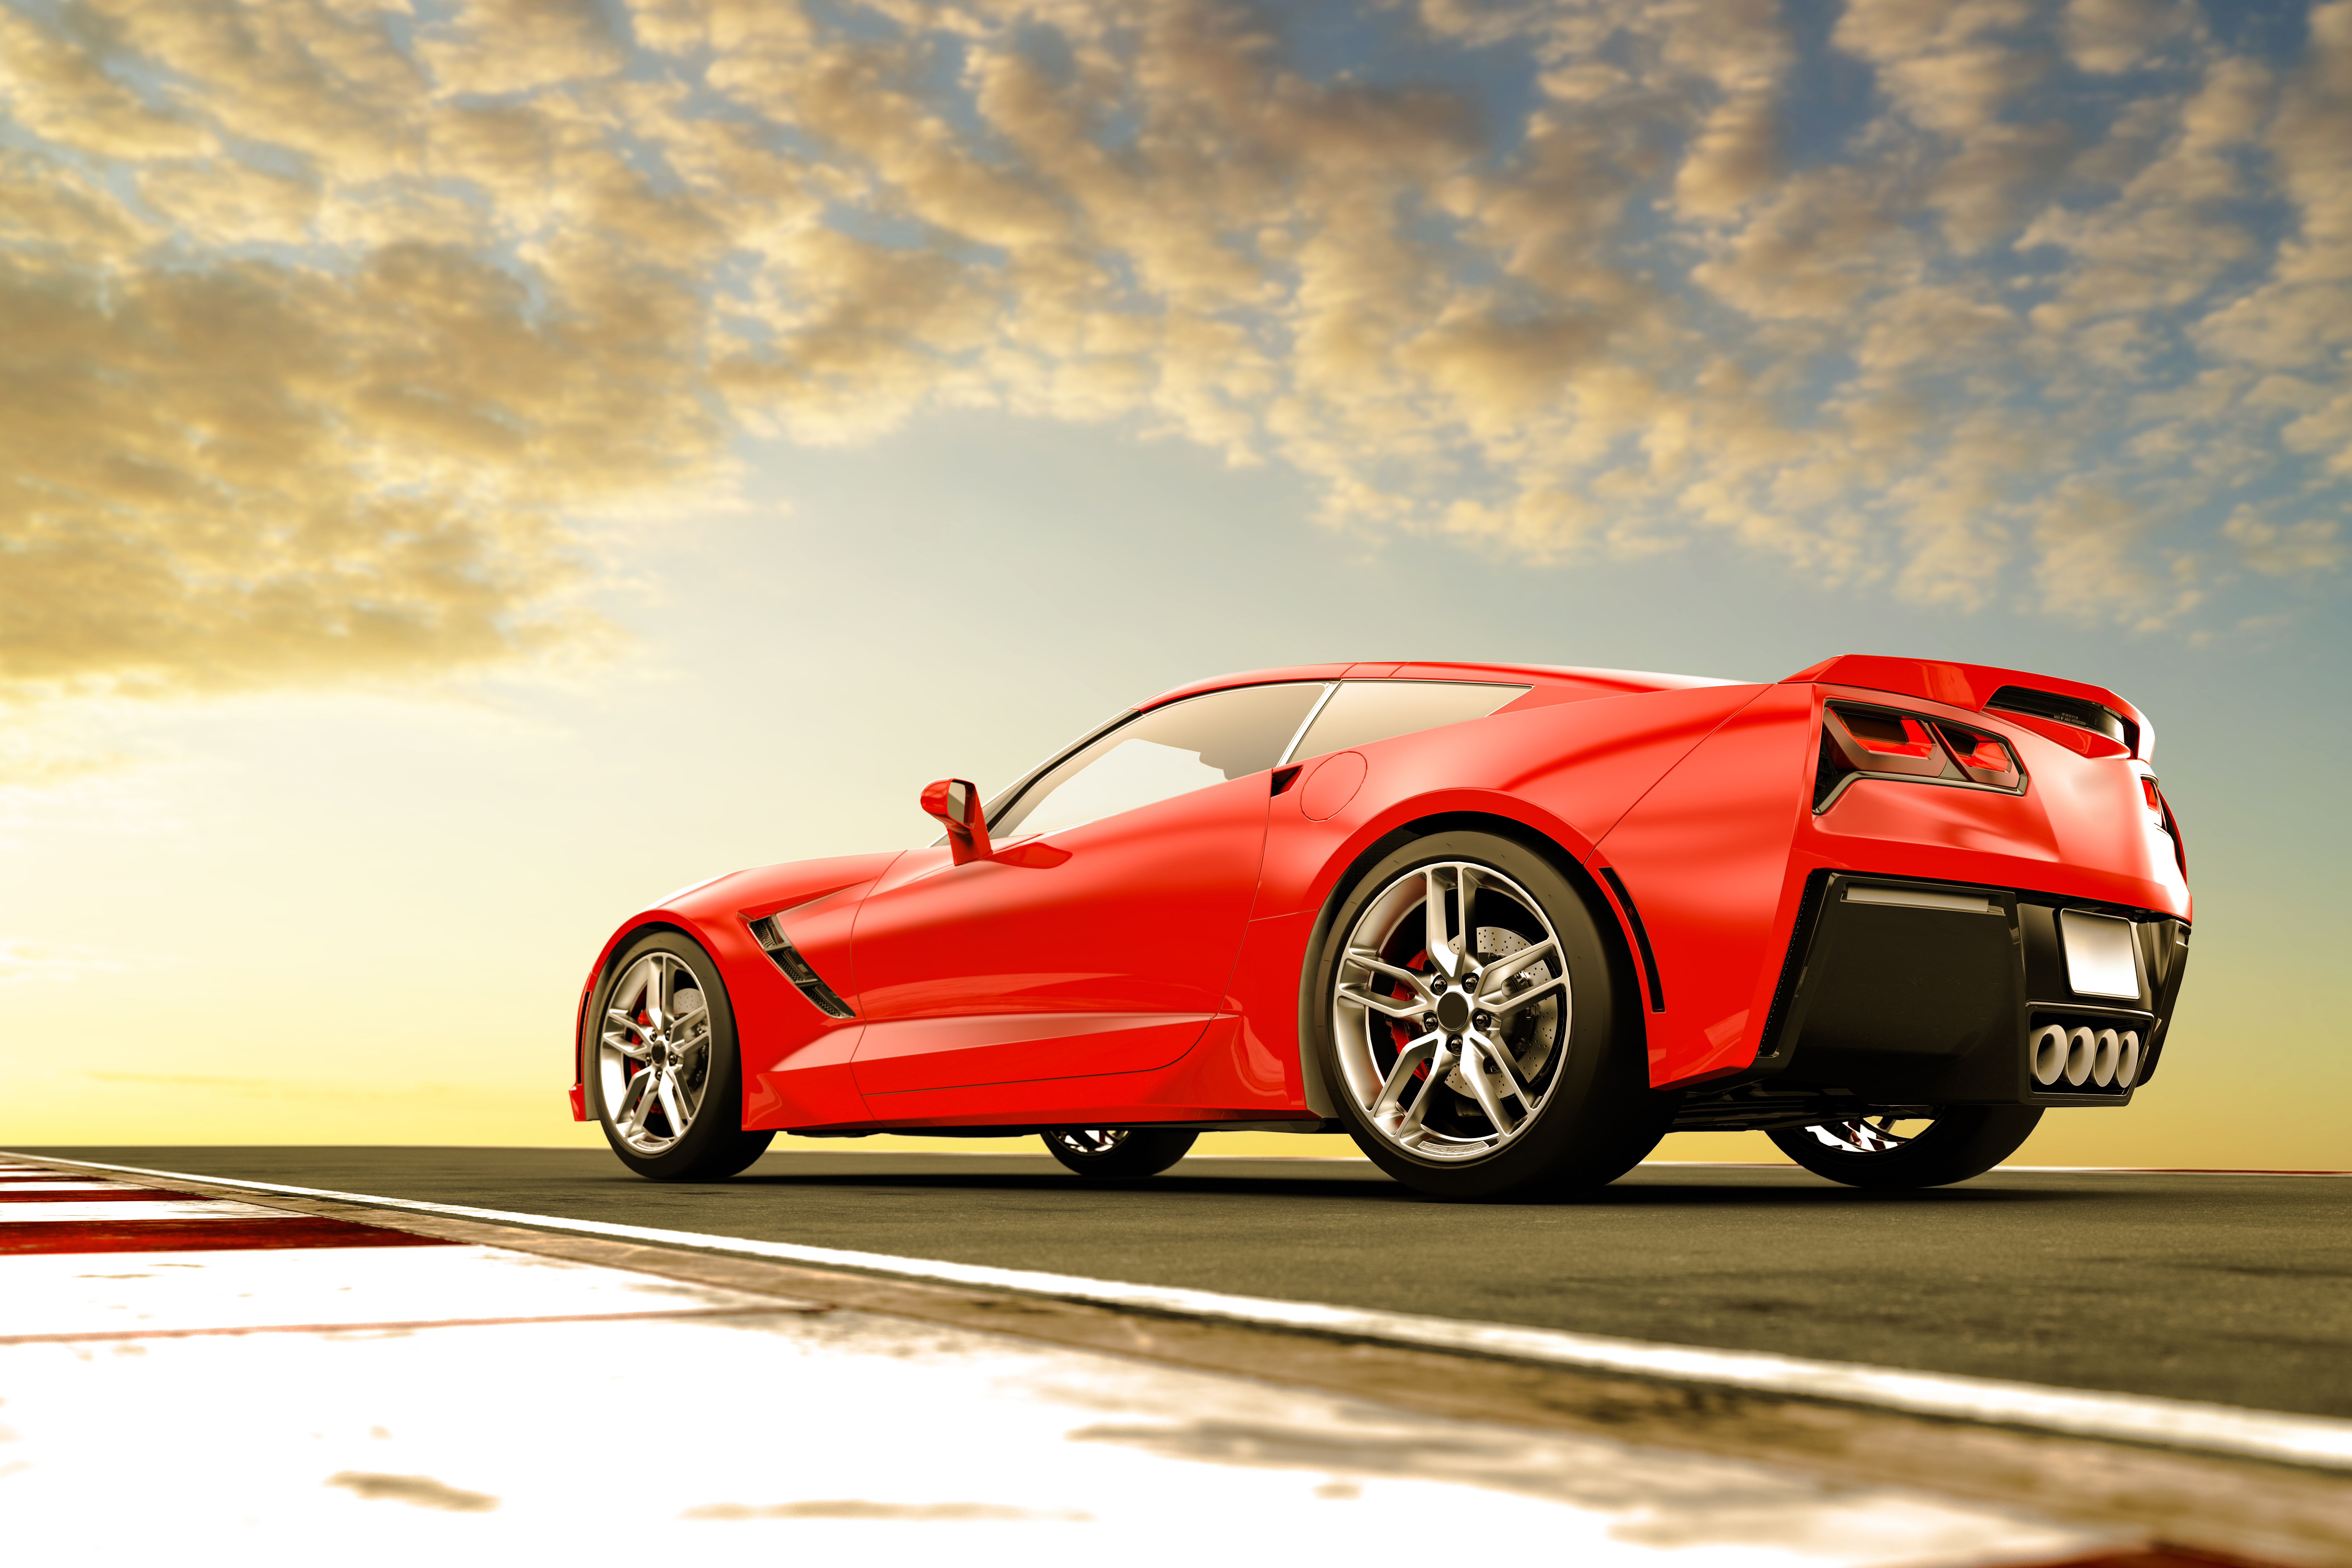 A sleek red sports car on a race track.